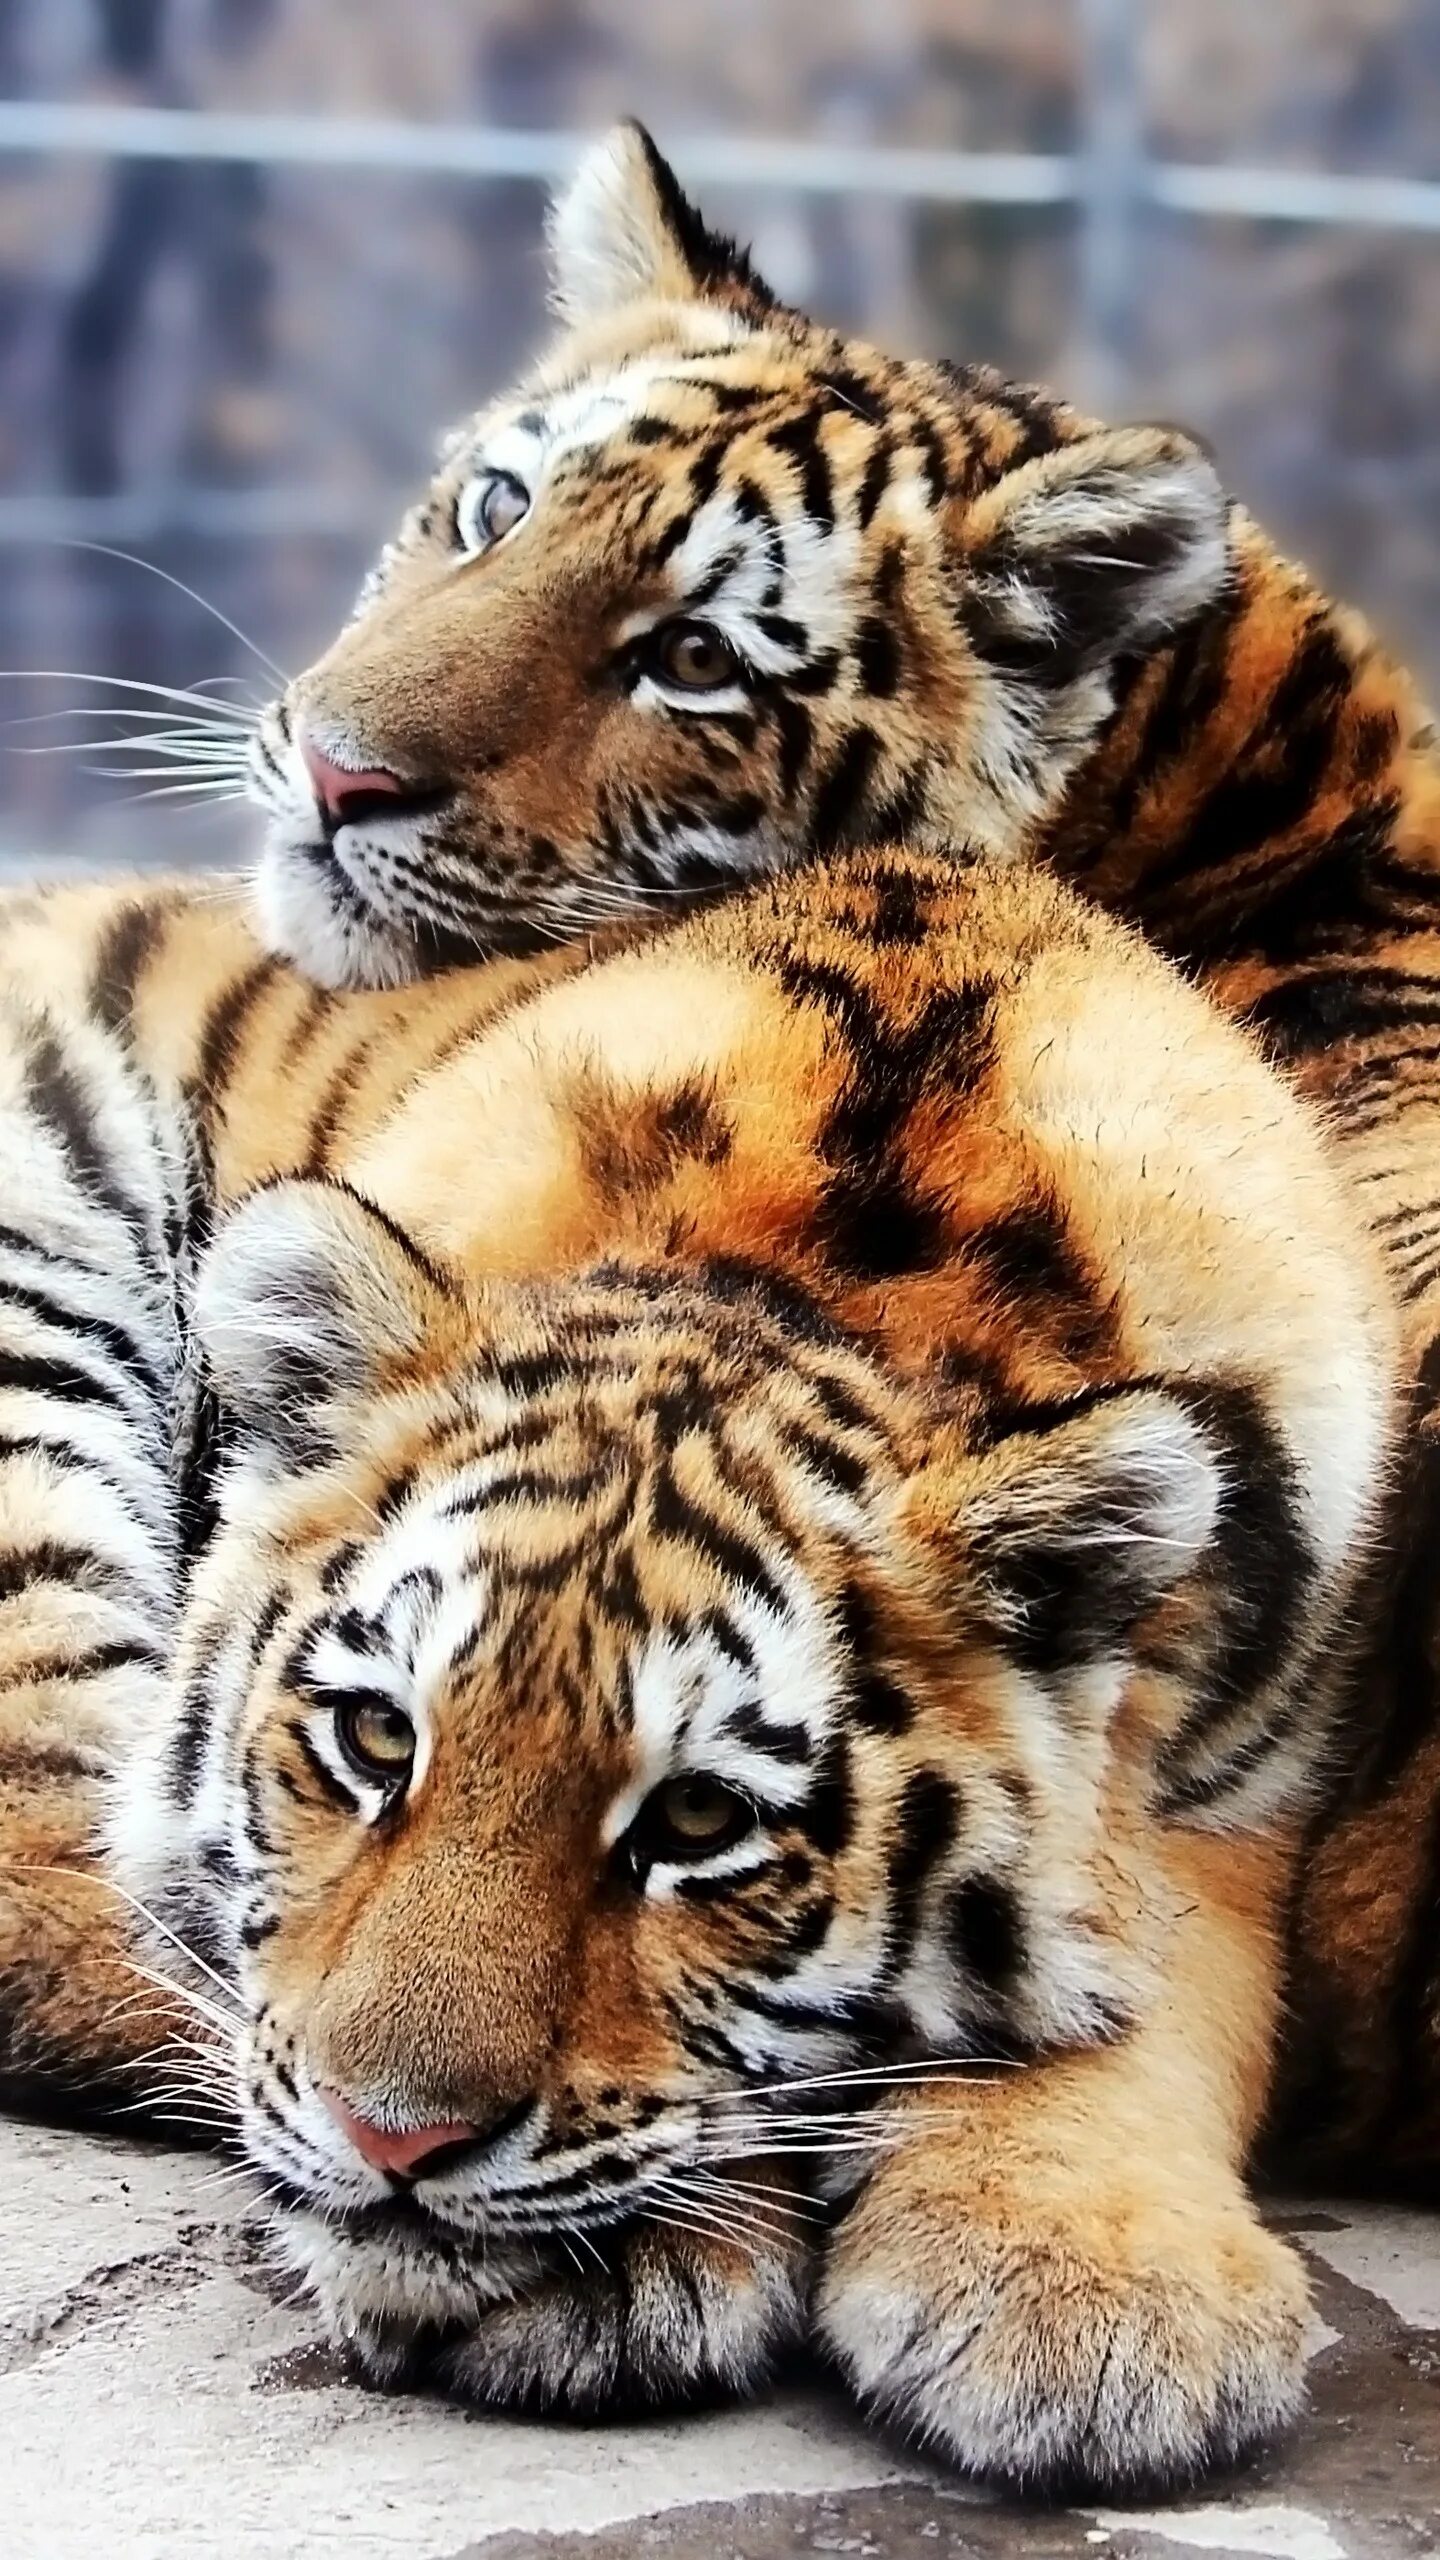 Заставки на телефон тиграми бесплатные. Тигр. Красивый тигр. Тигр и тигрица. Шикарный тигр.